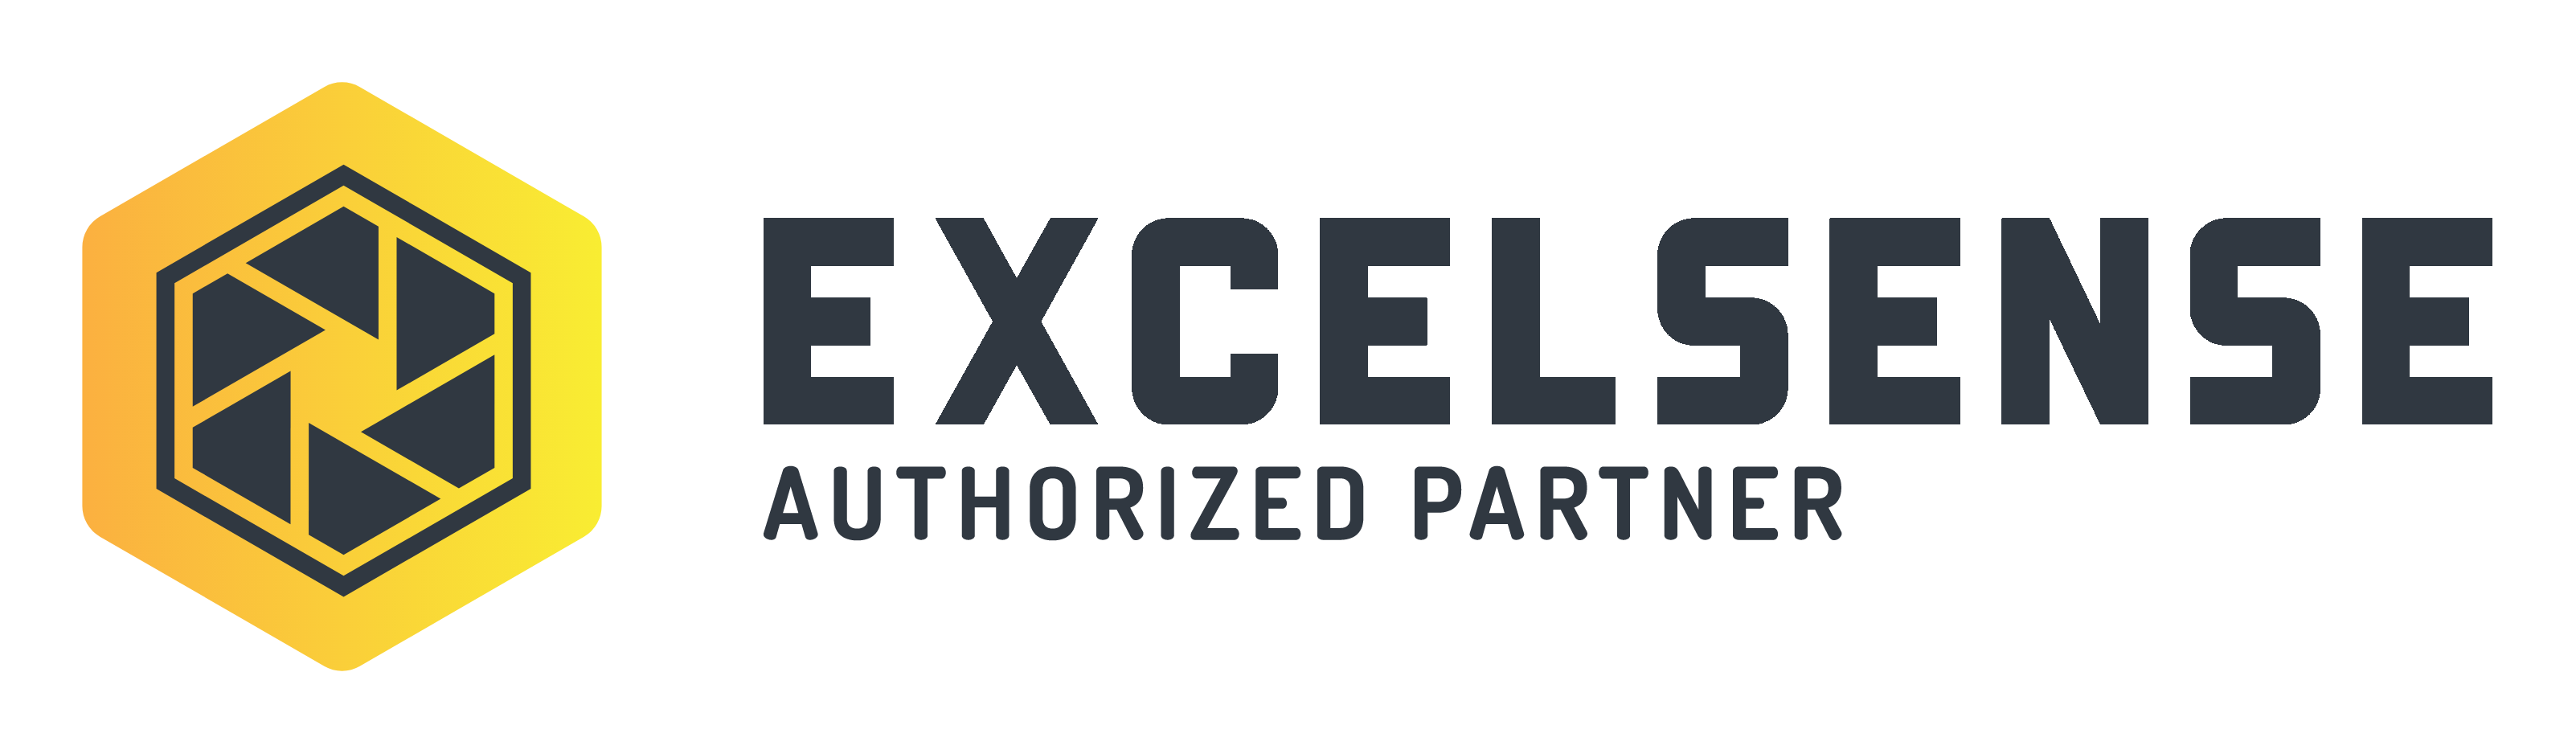 ExcelSense Technologies logo image